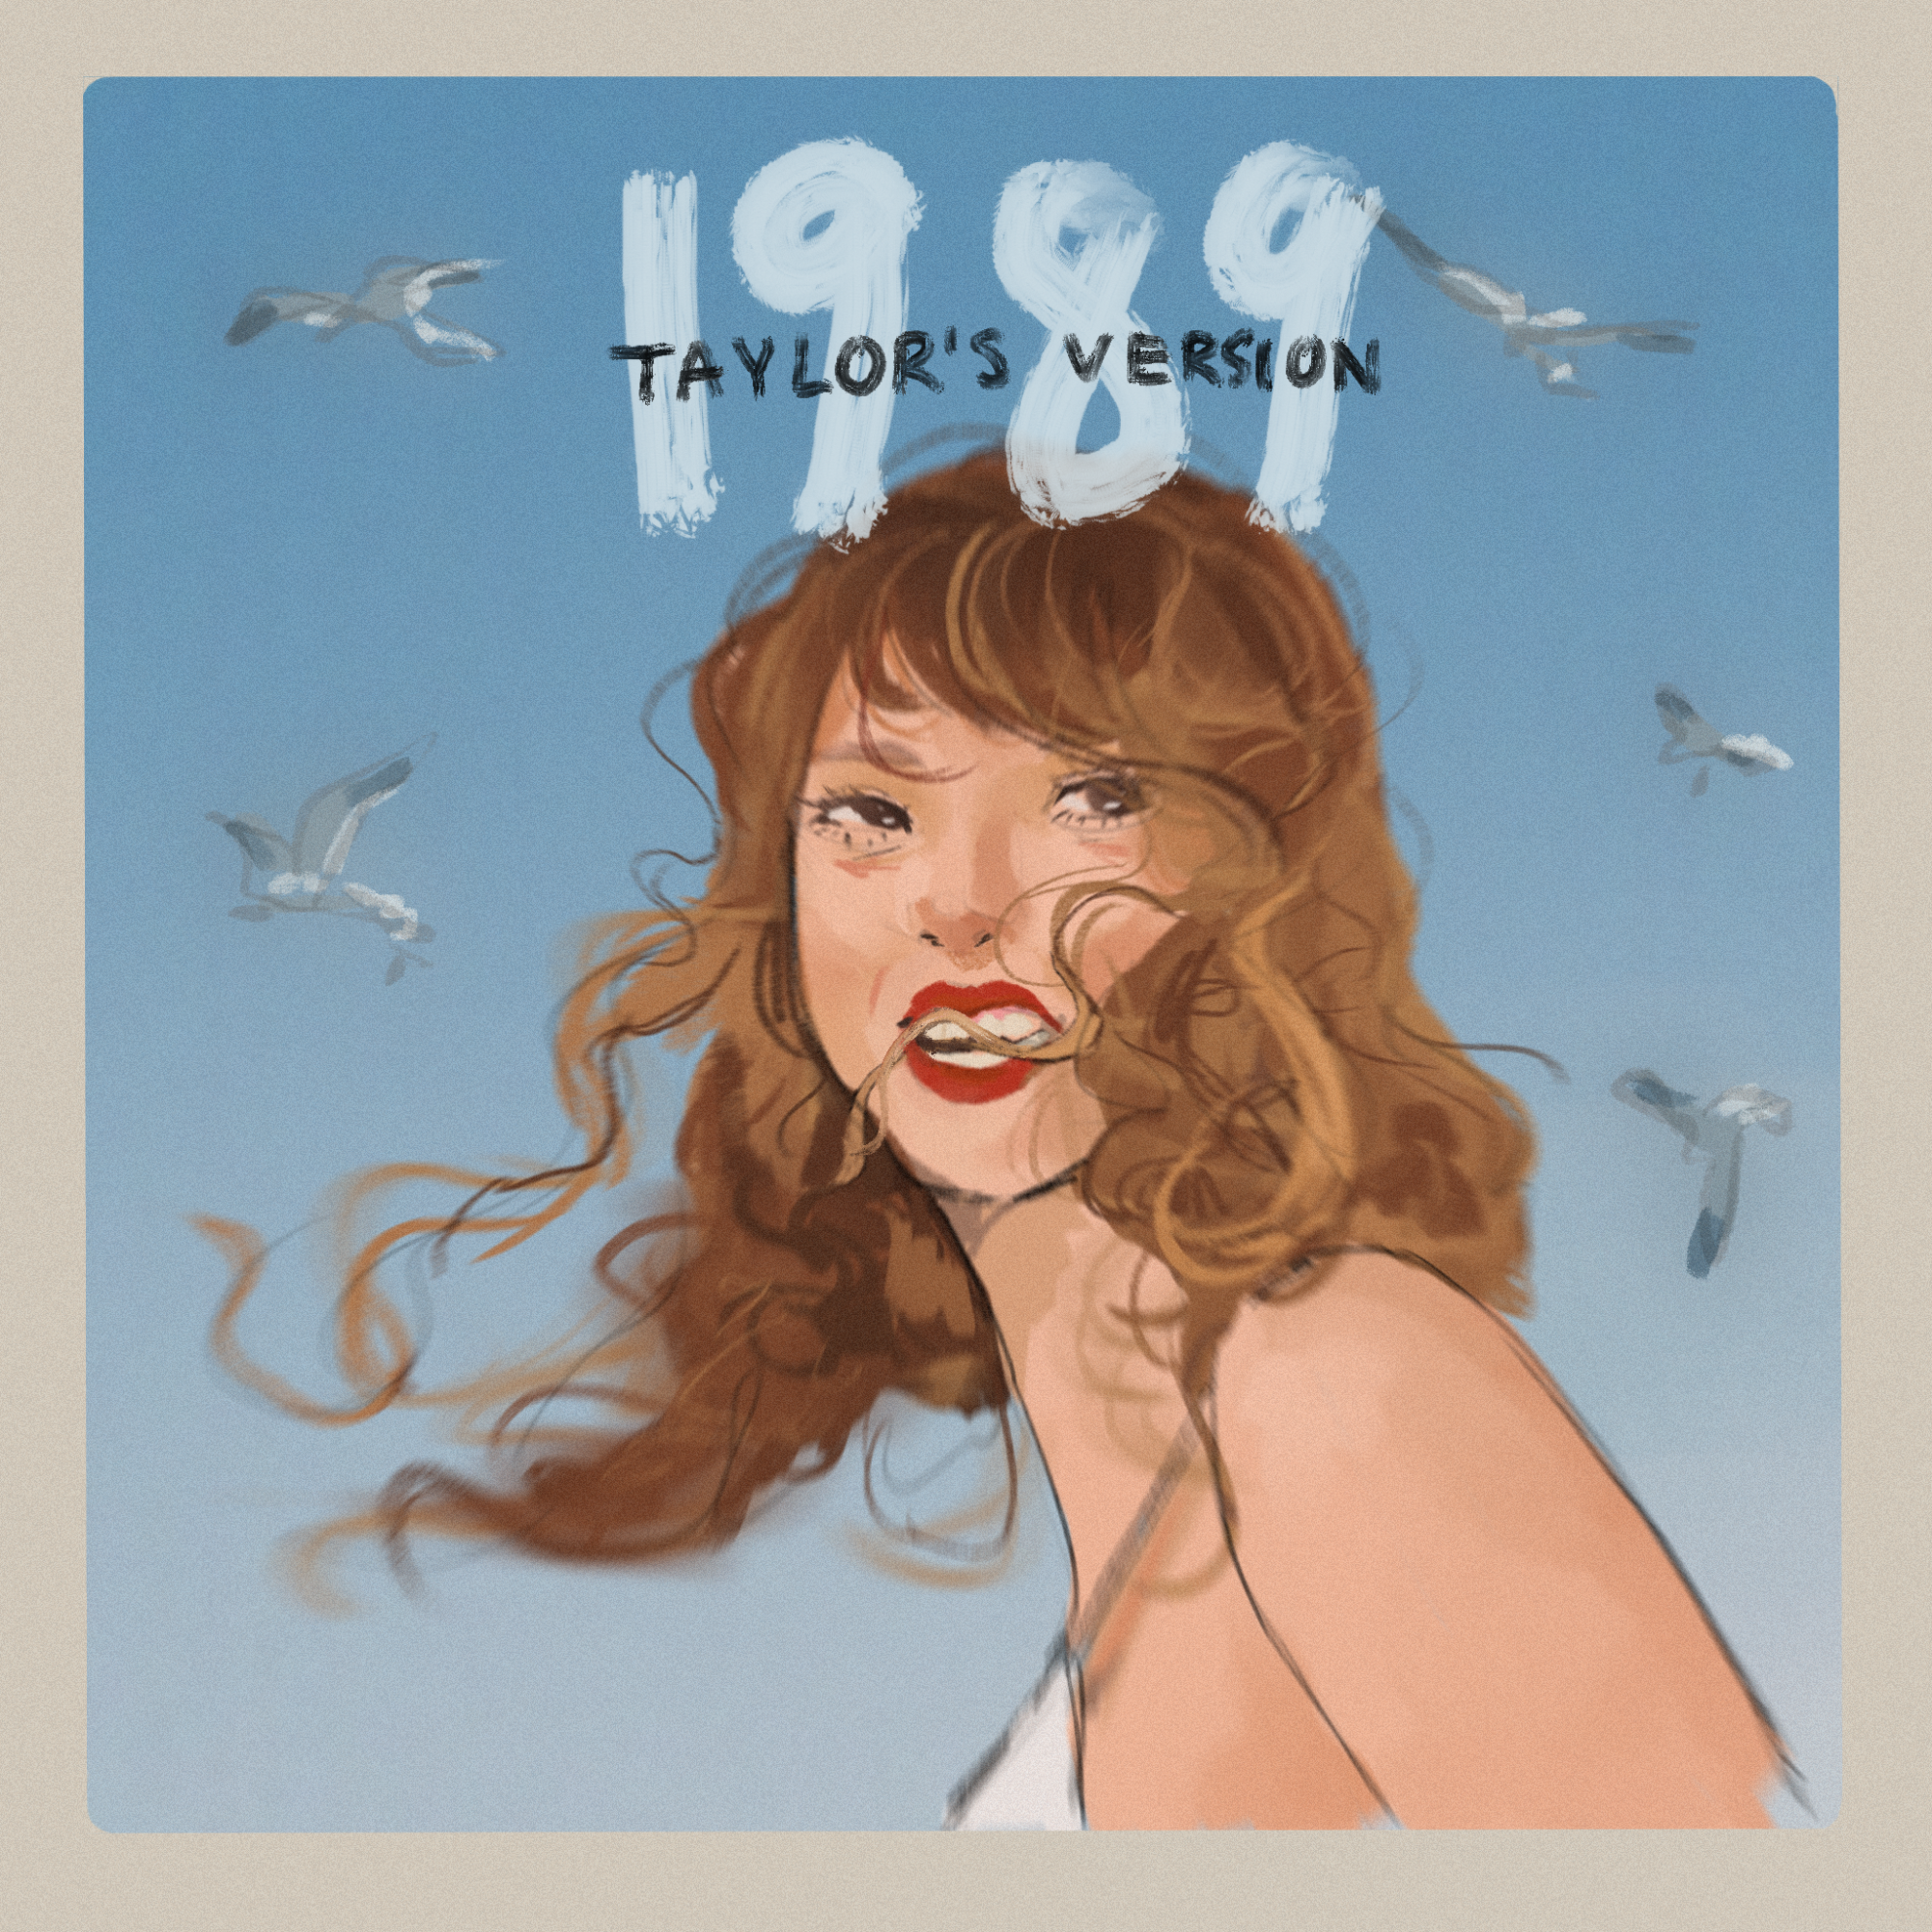 1989 (Taylor's Version) Digital Album – Taylor Swift Official Store